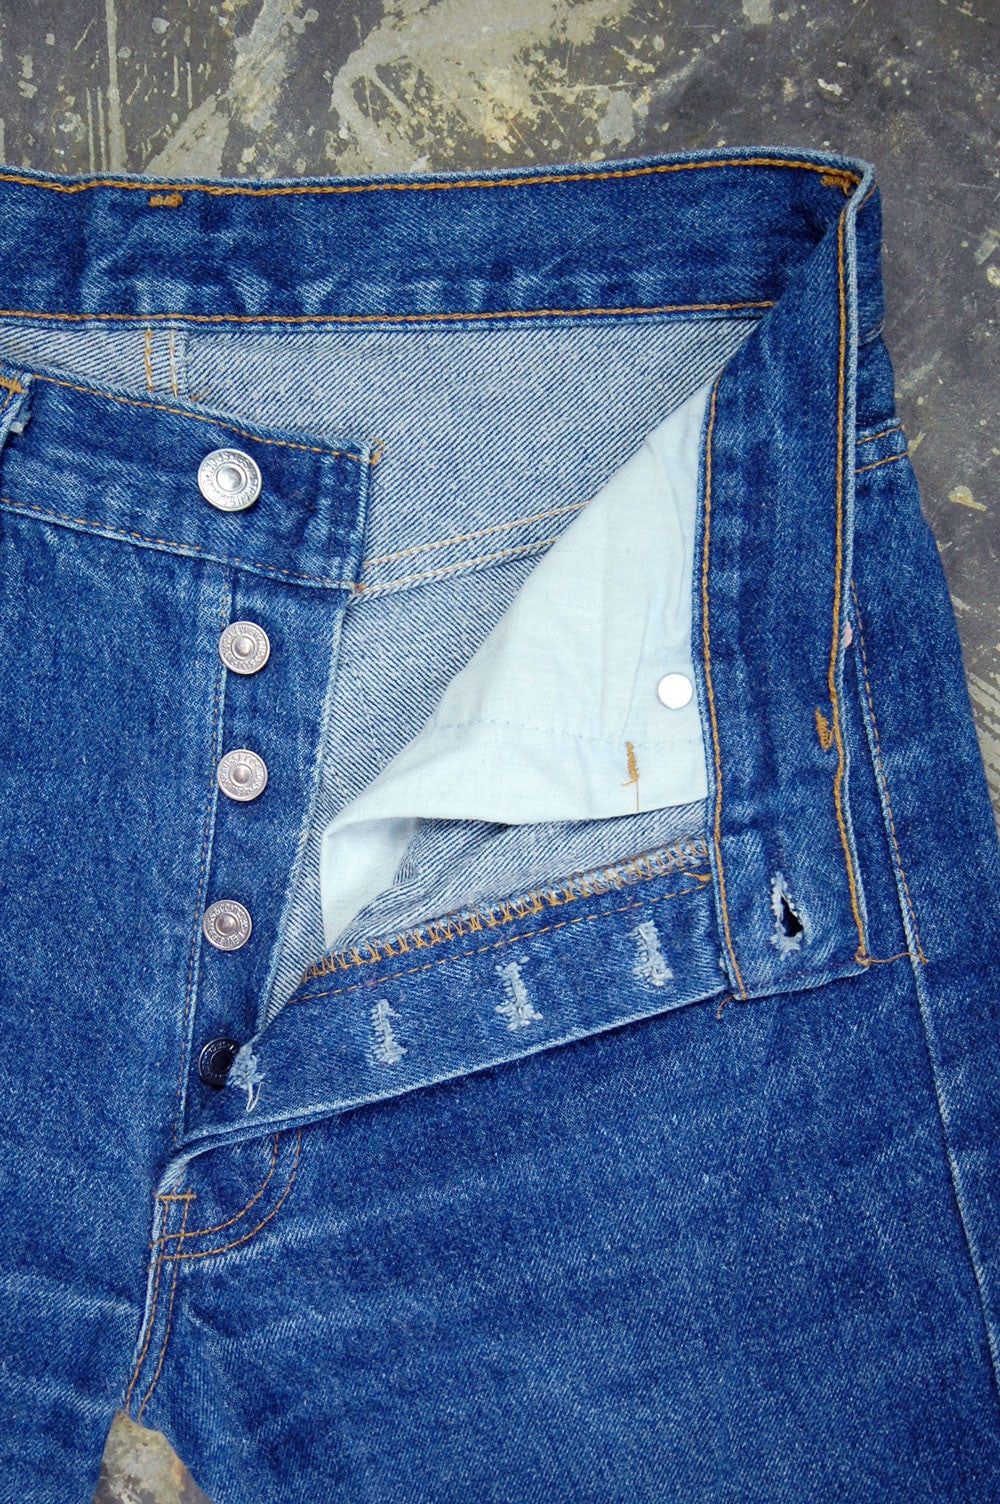 Vintage Levi's 501xx USA One Wash Denim Jeans (JYJ-047) – JUNKYARD